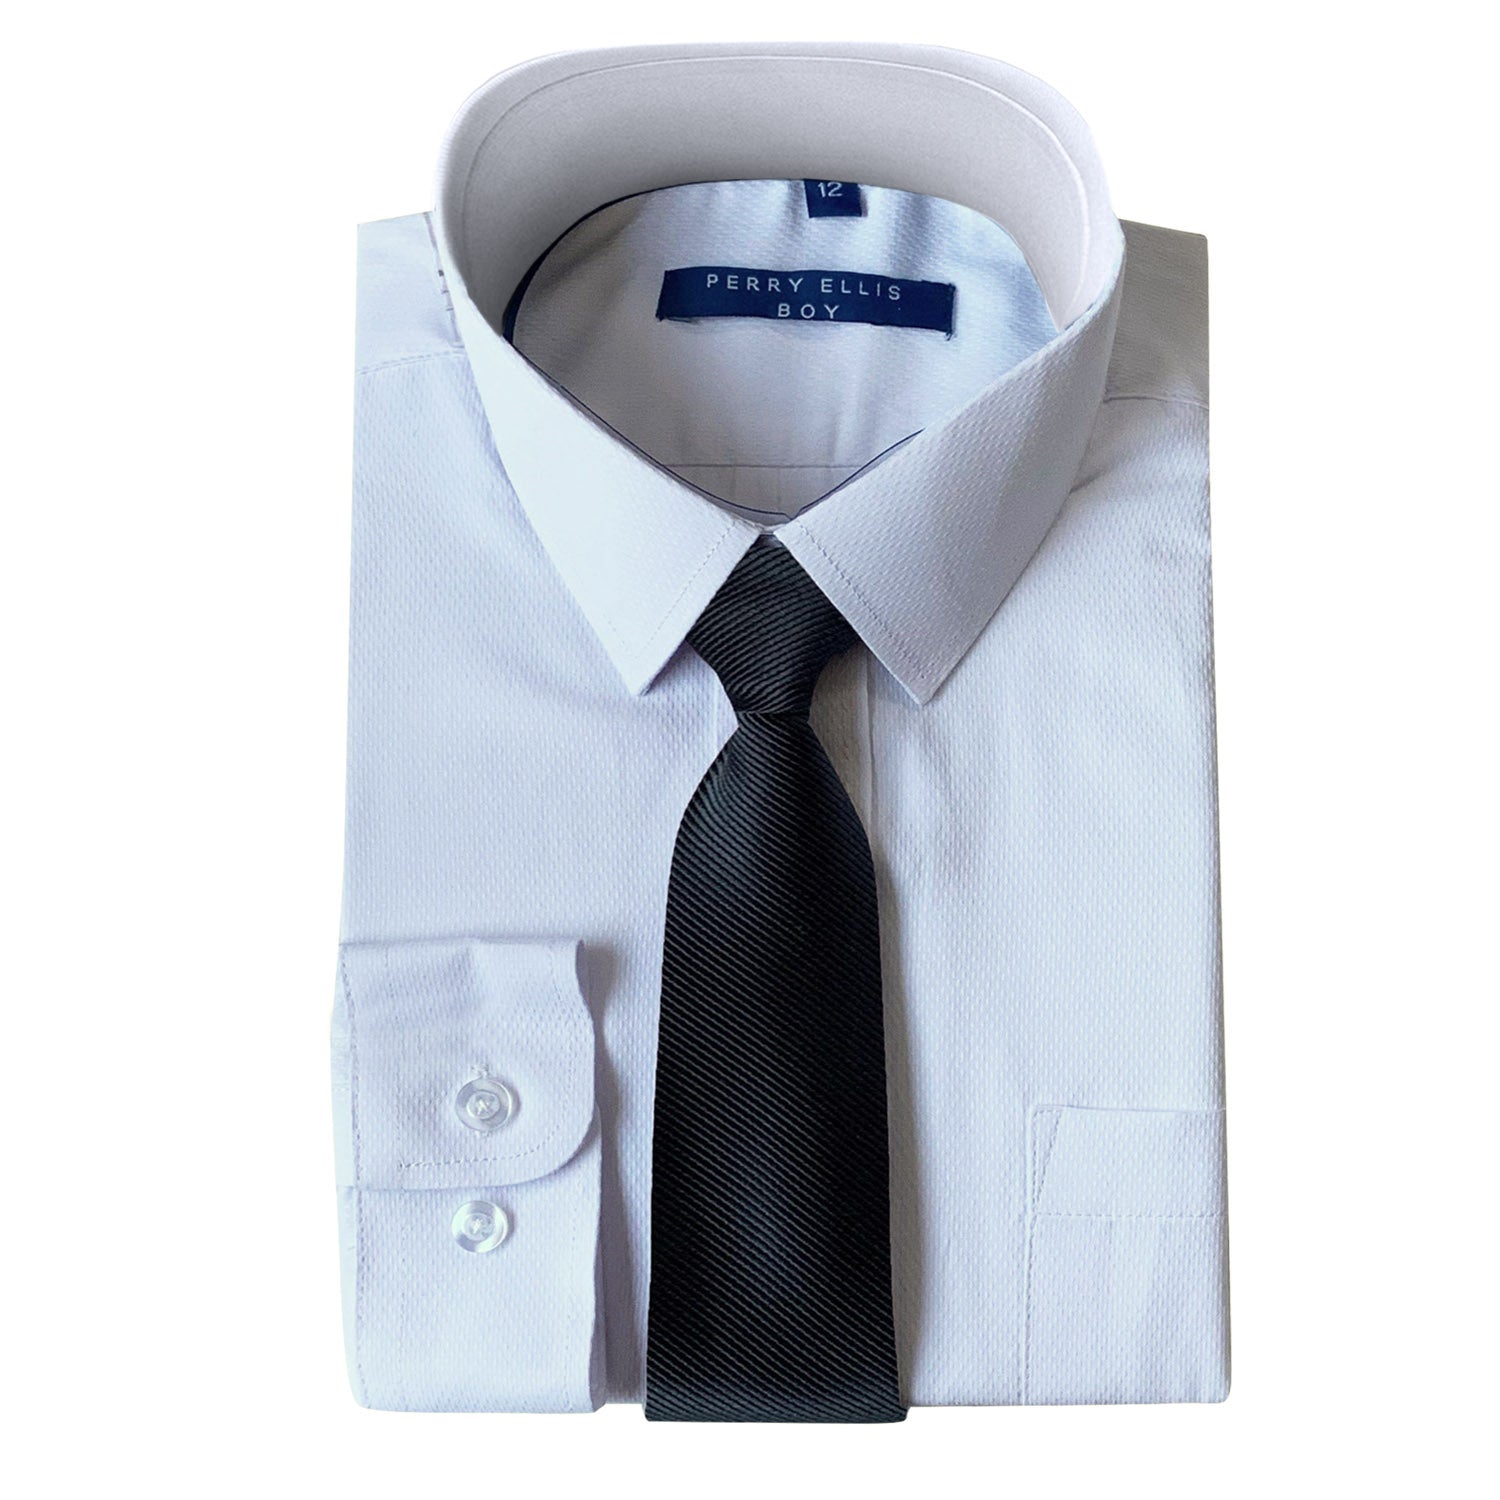 Perry Ellis Boys Dress Shirts w Dk Grey Tie Solid Shirts w Colored Tie